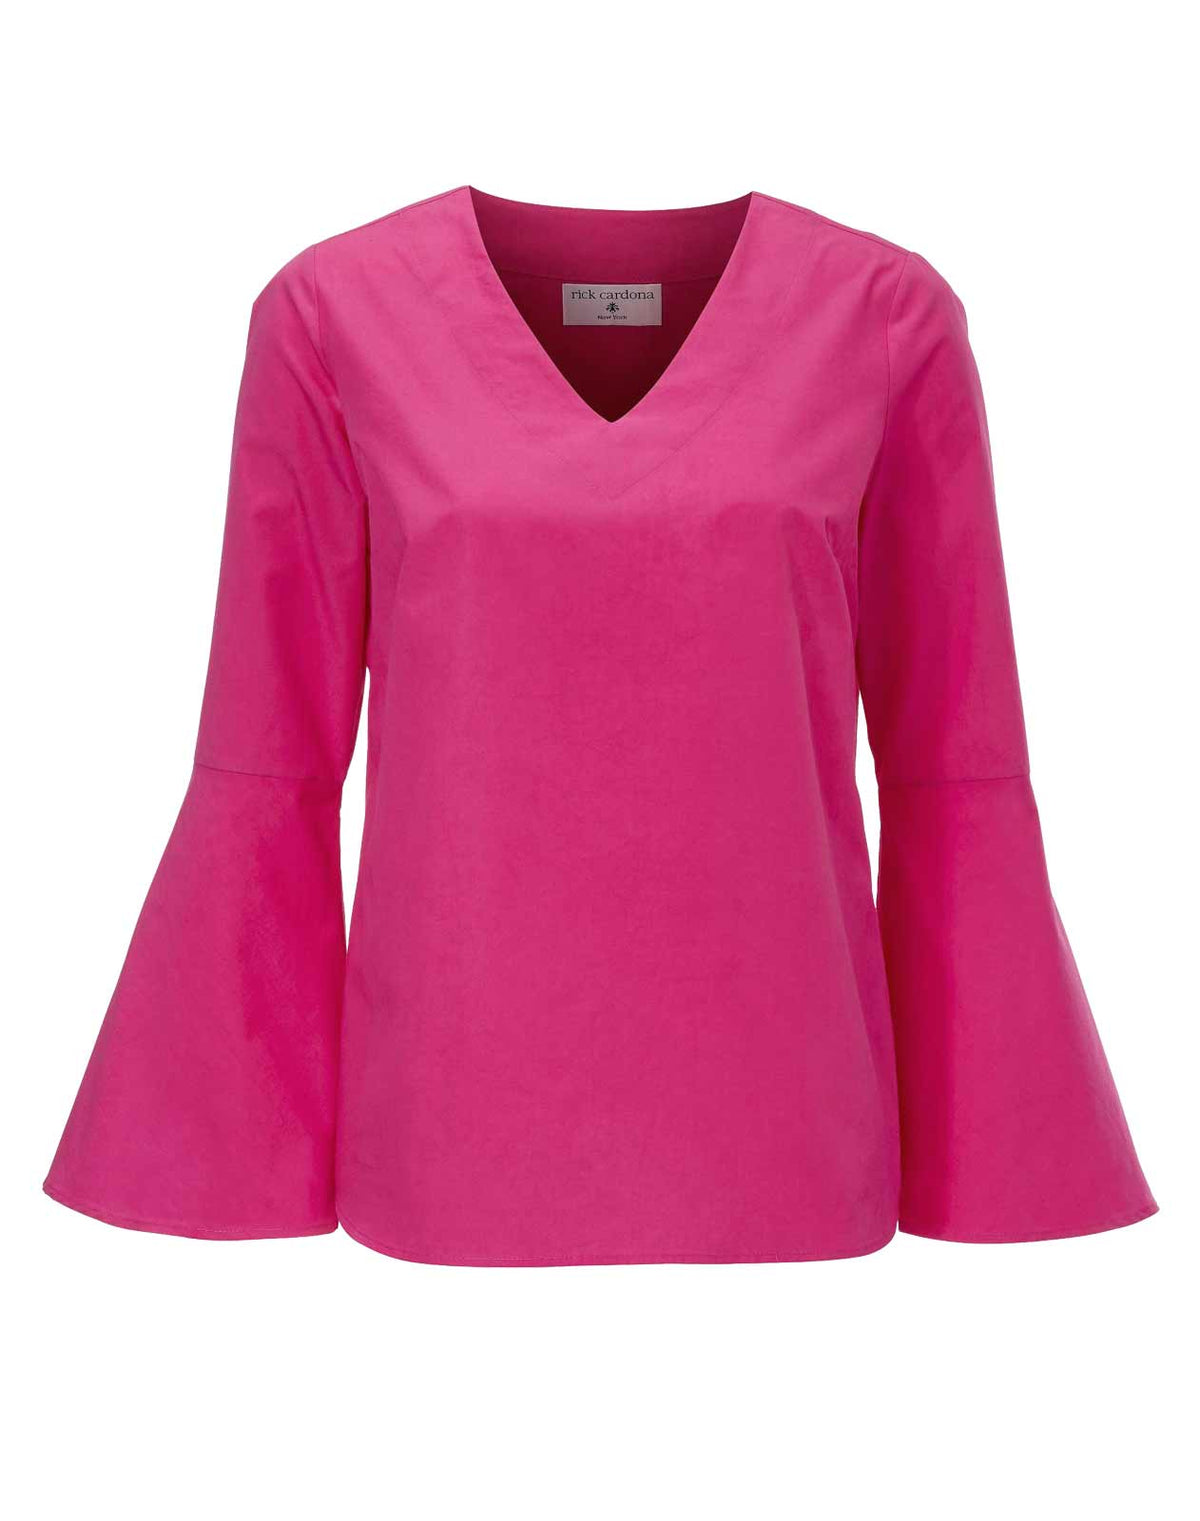 Rick Cardona Damen Designer-Bluse, pink